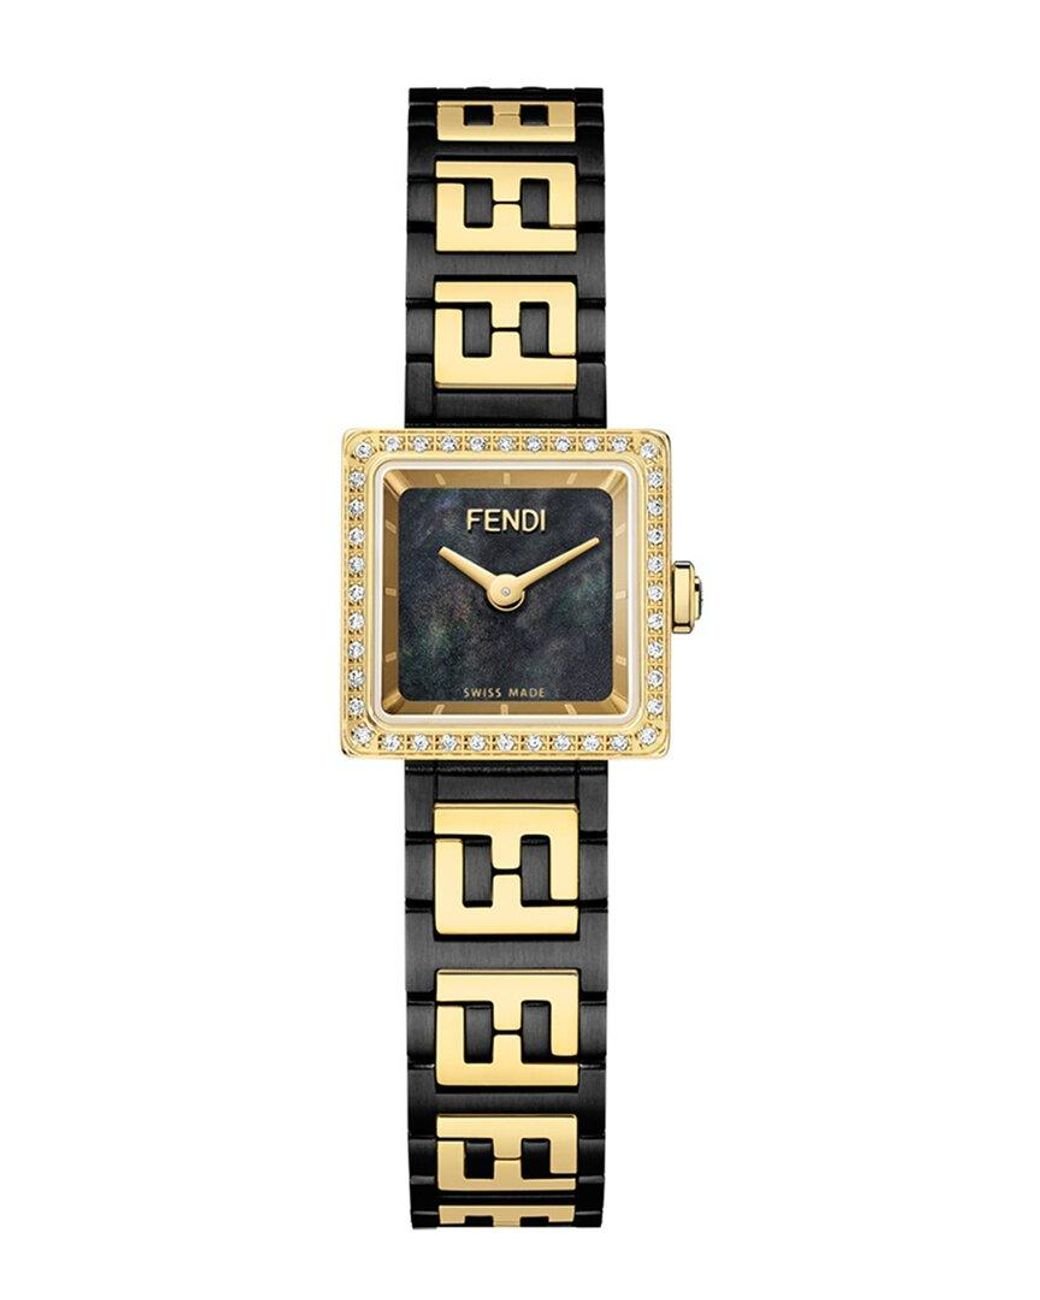 Fendi Forever Diamond Watch in Metallic